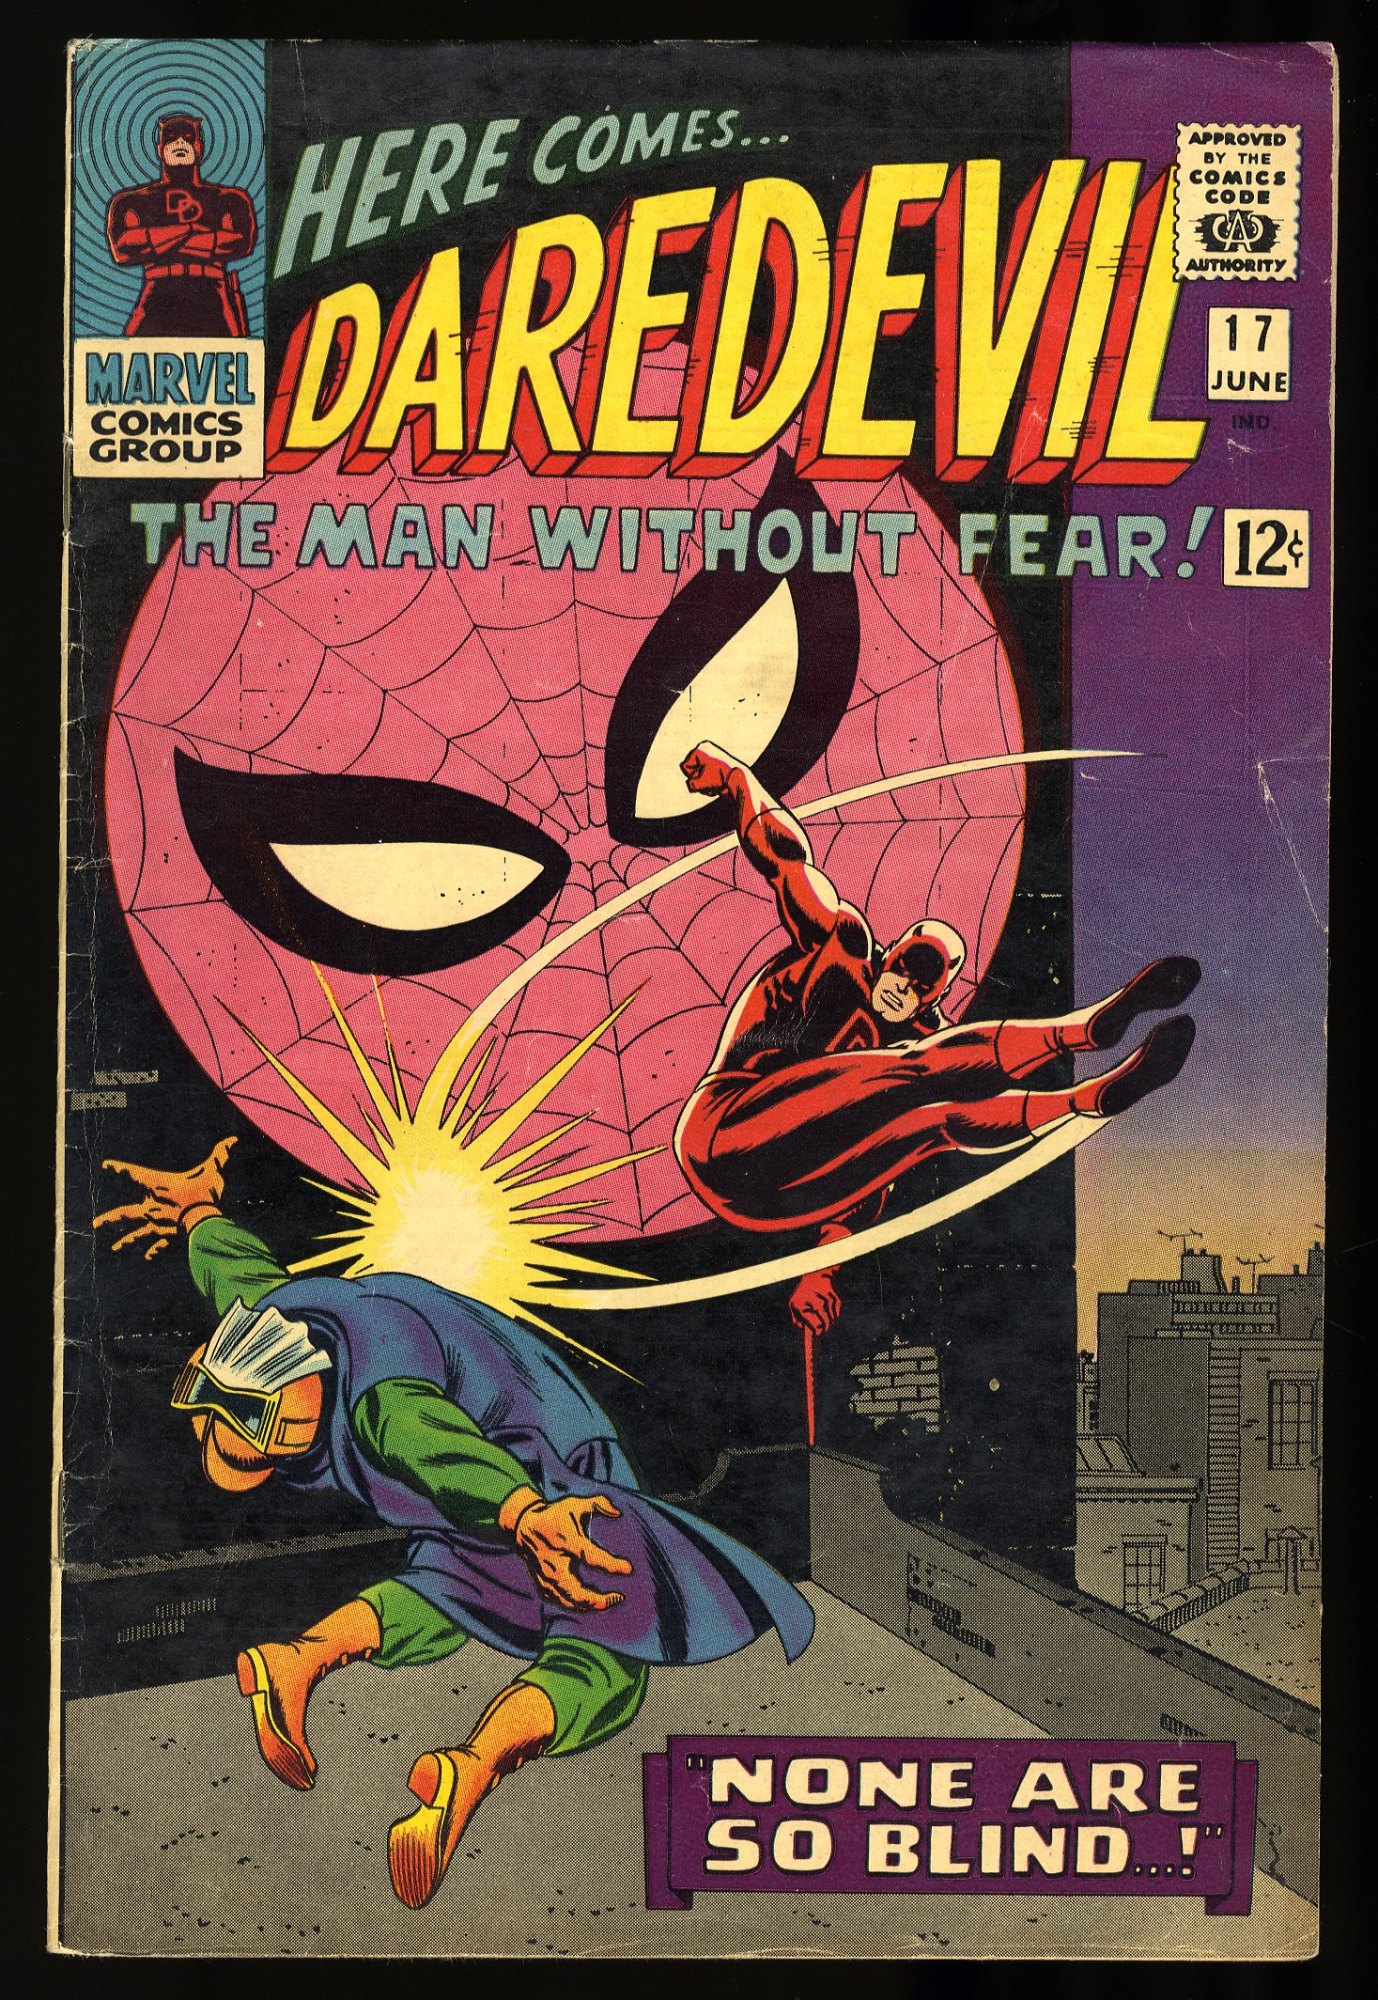 Image: Daredevil #17 FN+ 6.5 Spider-Man Appearance John Romita Art!